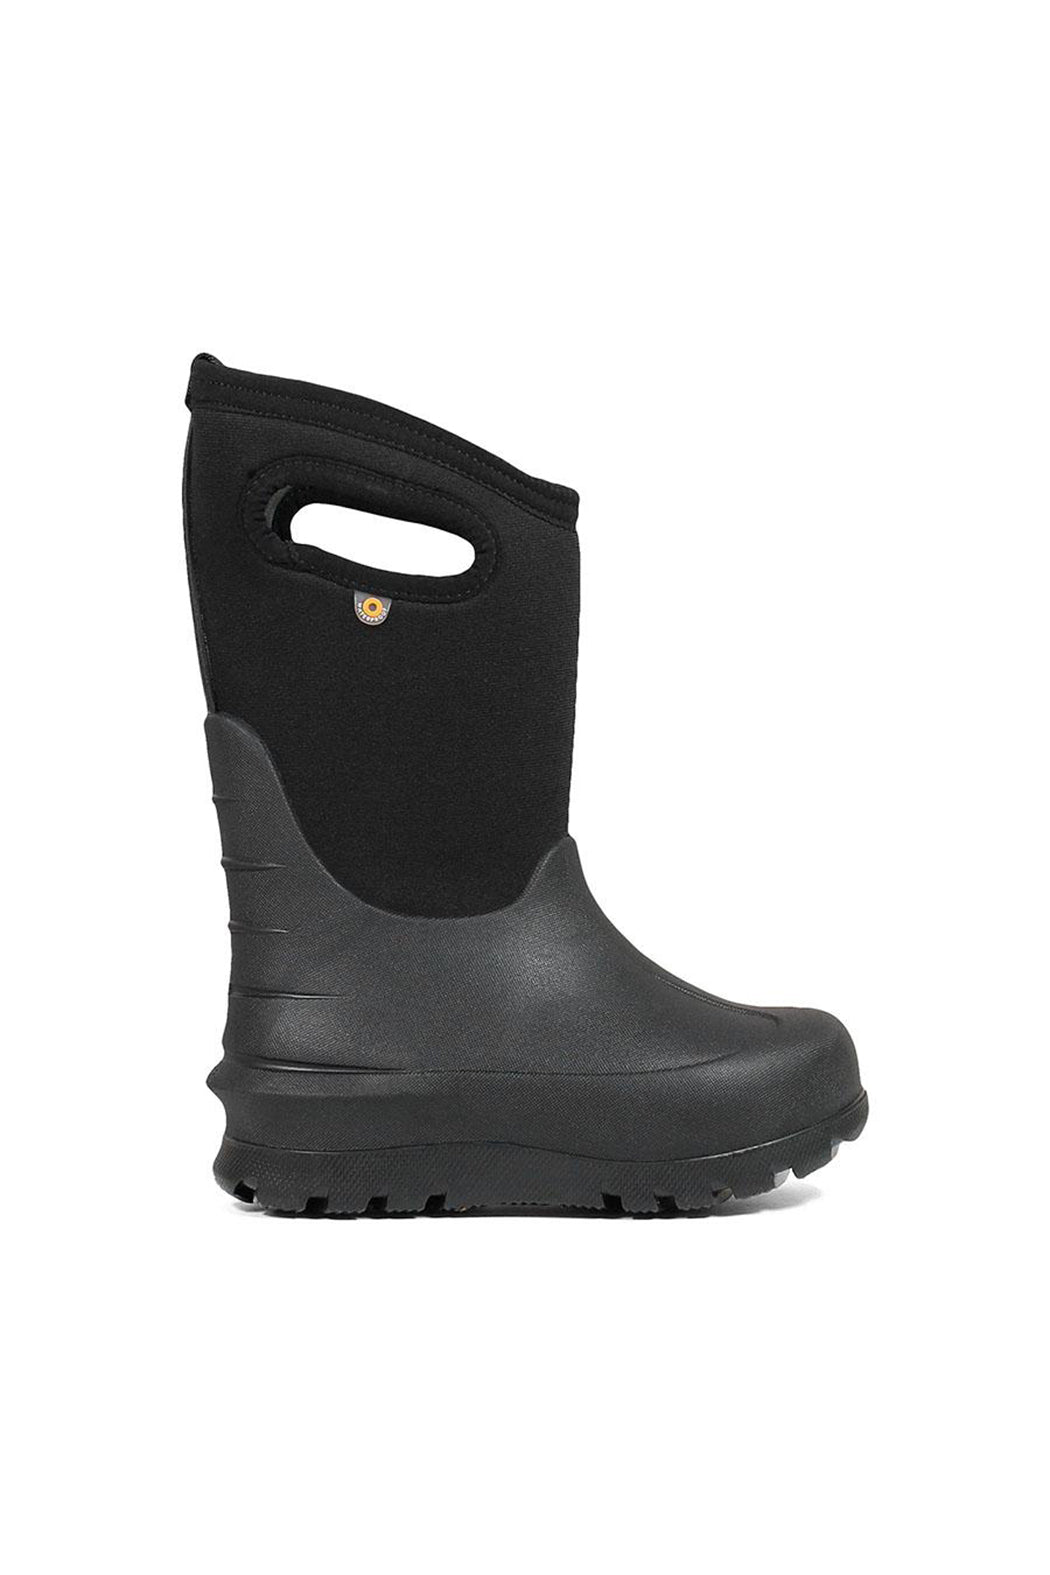 BOGS Neo-Classic Solid Waterproof Winter Boots